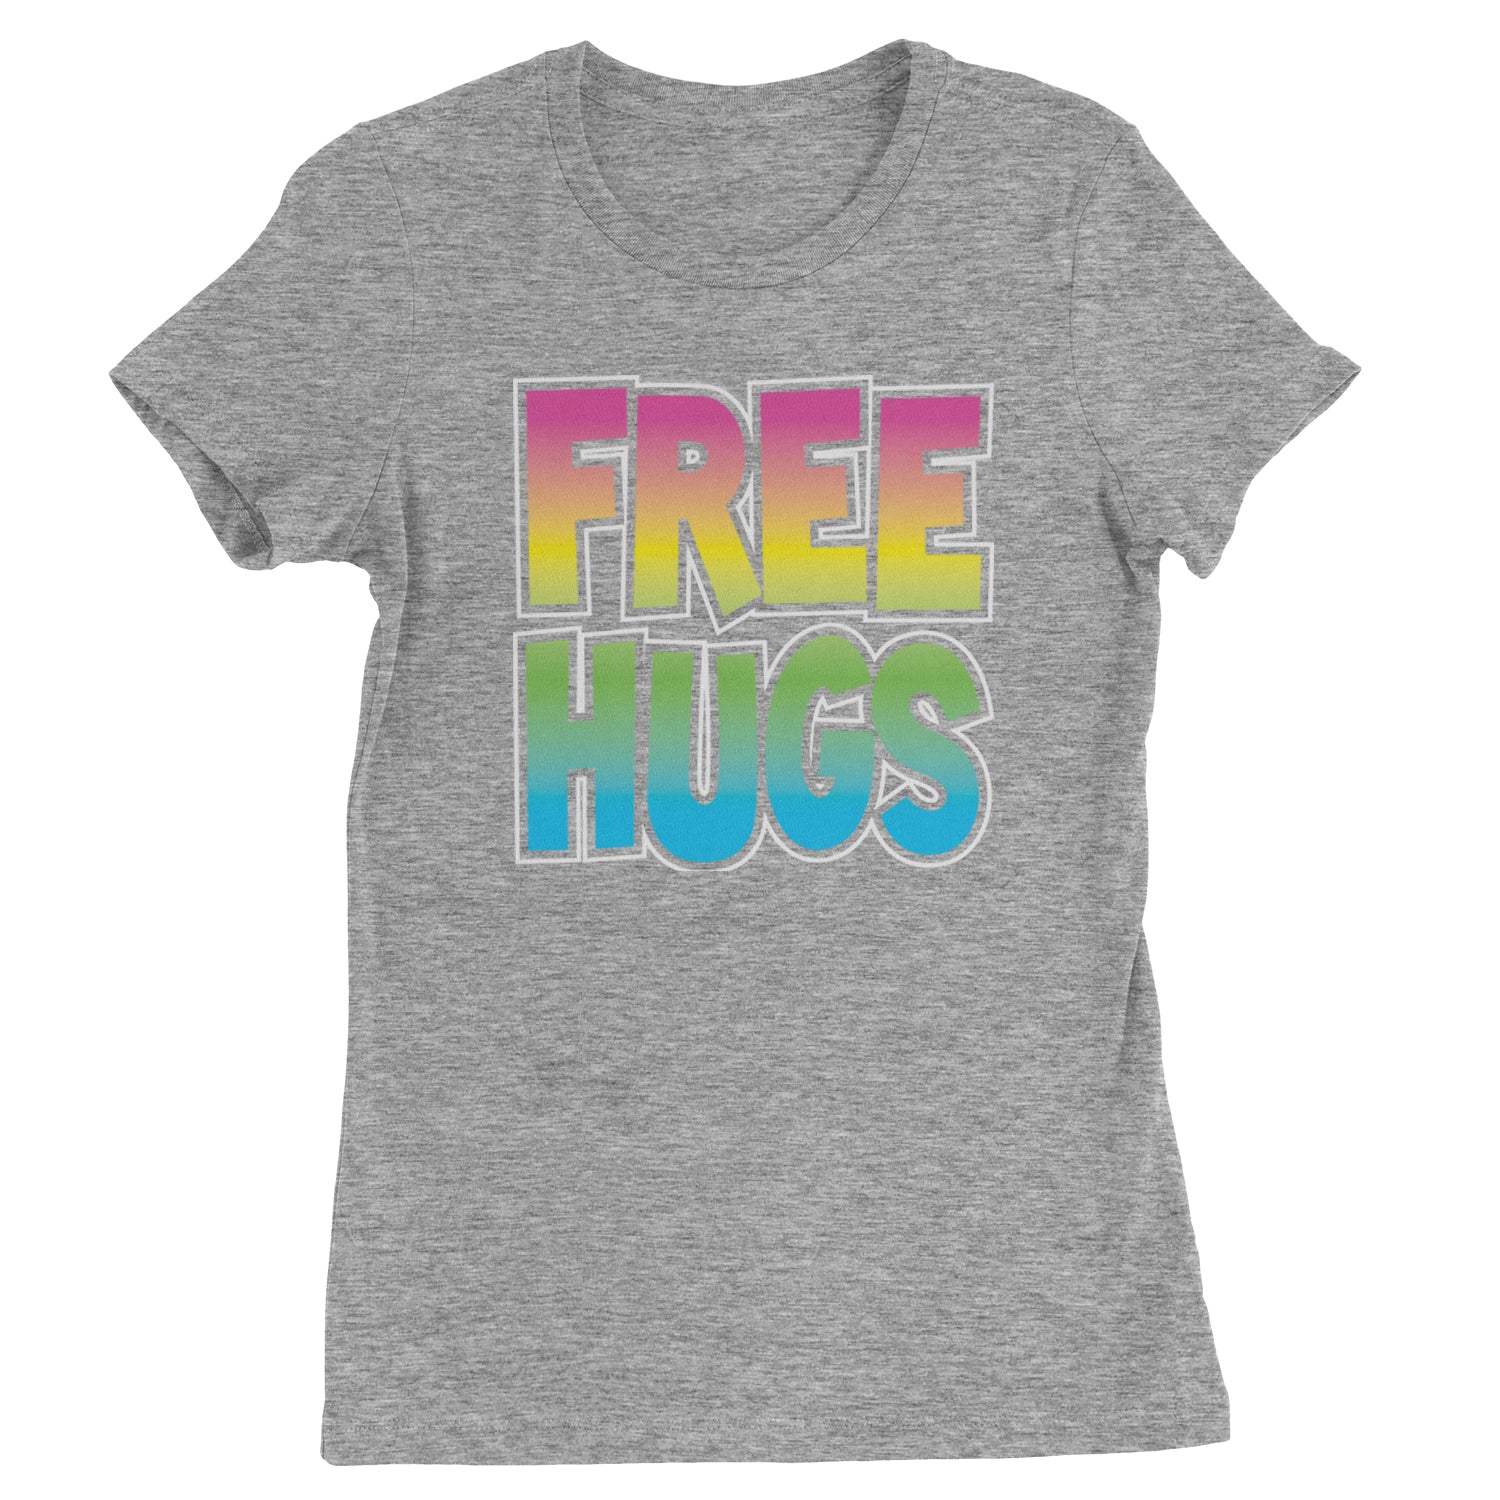 Free Hugs Womens T-shirt free, hugger, hugging, hugs by Expression Tees